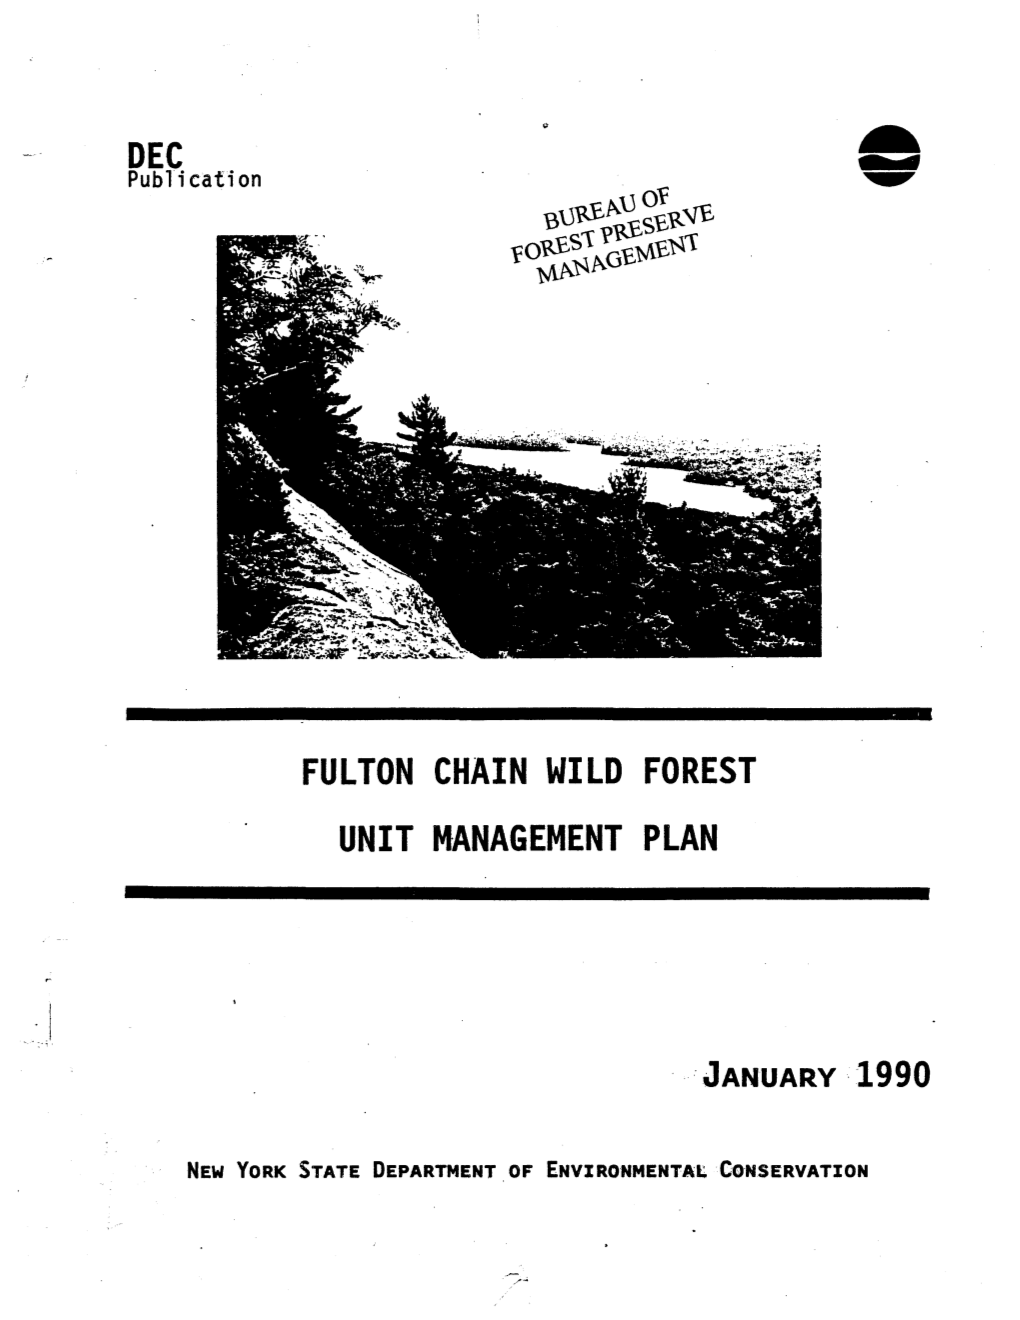 Fulton Chain Wild Forest Unit Management Plan